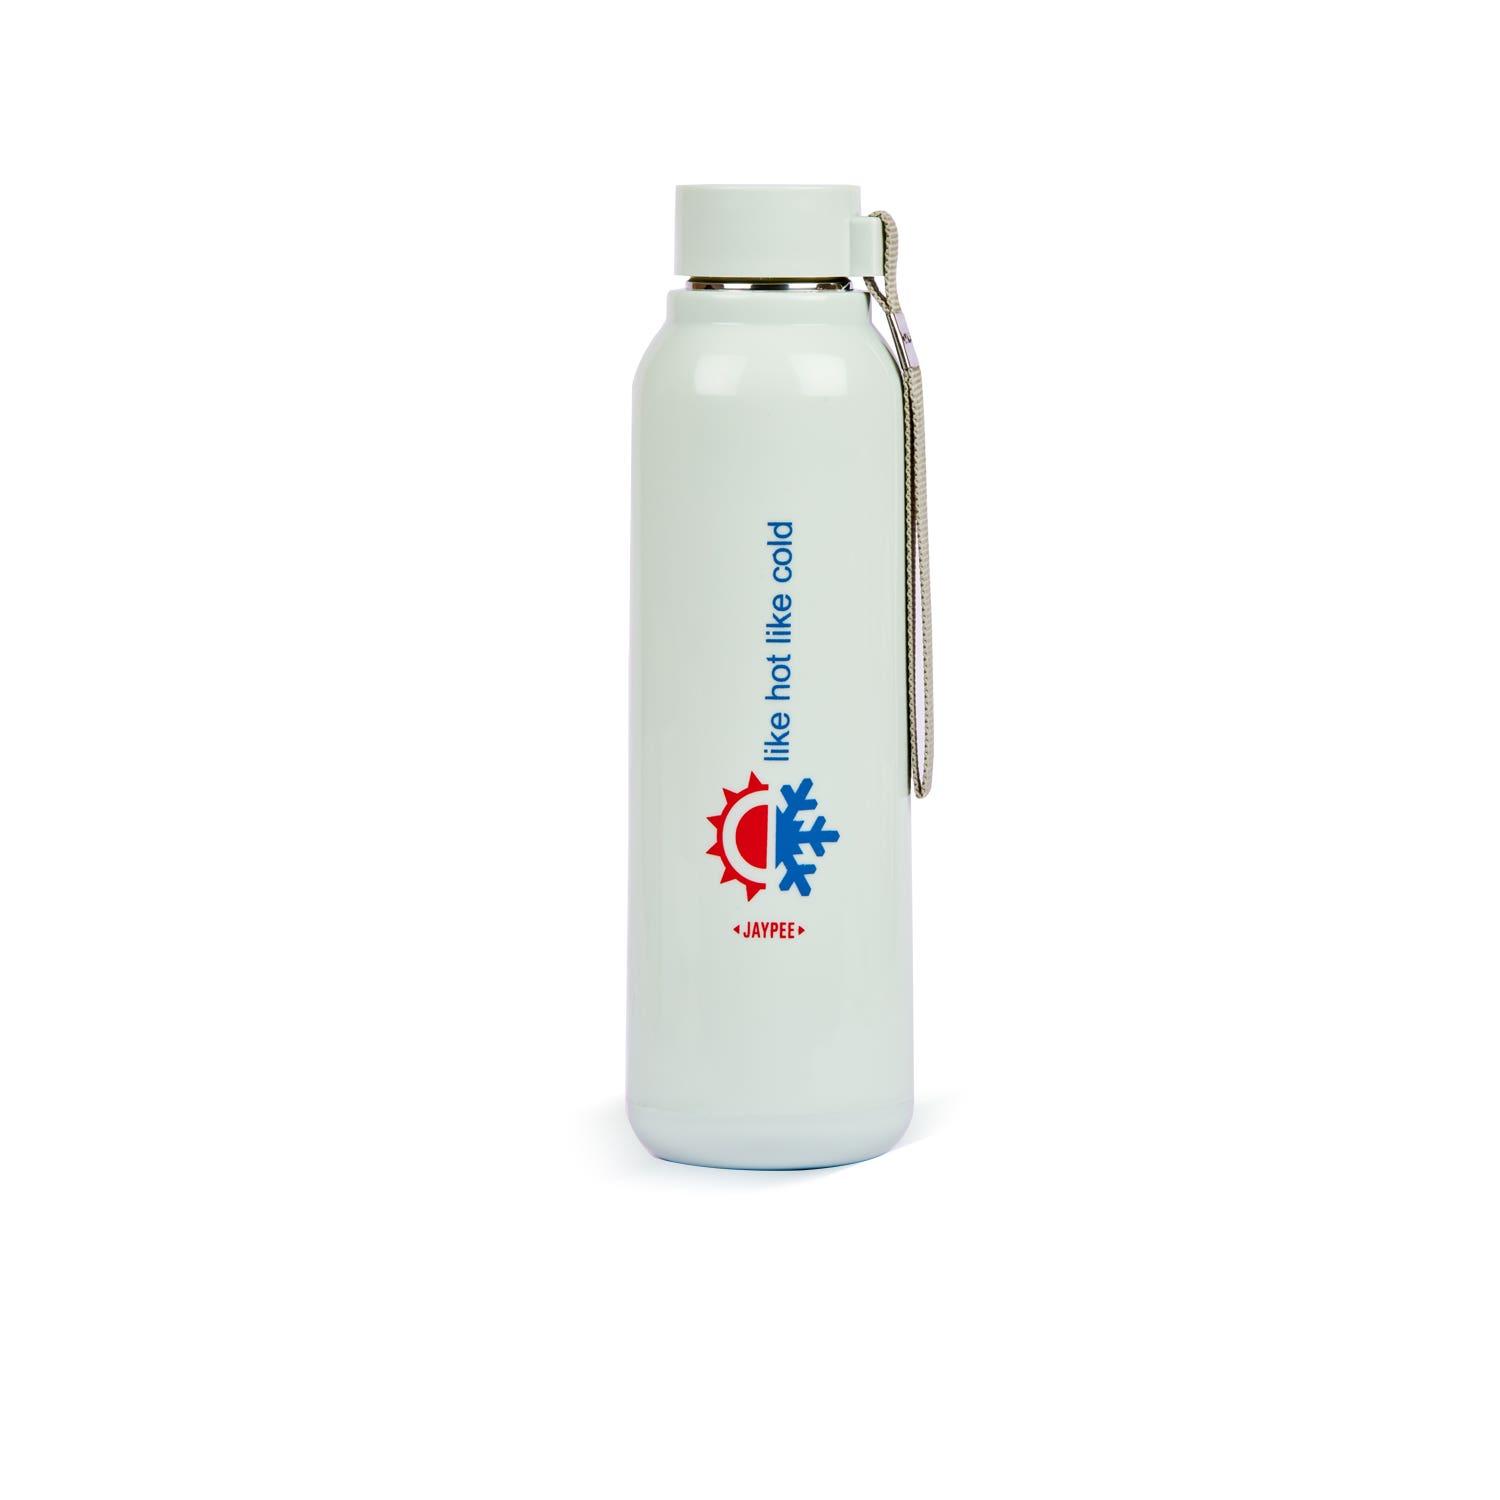 Jaypee Brightsteel Insulated Water Bottle 900Ml 1U